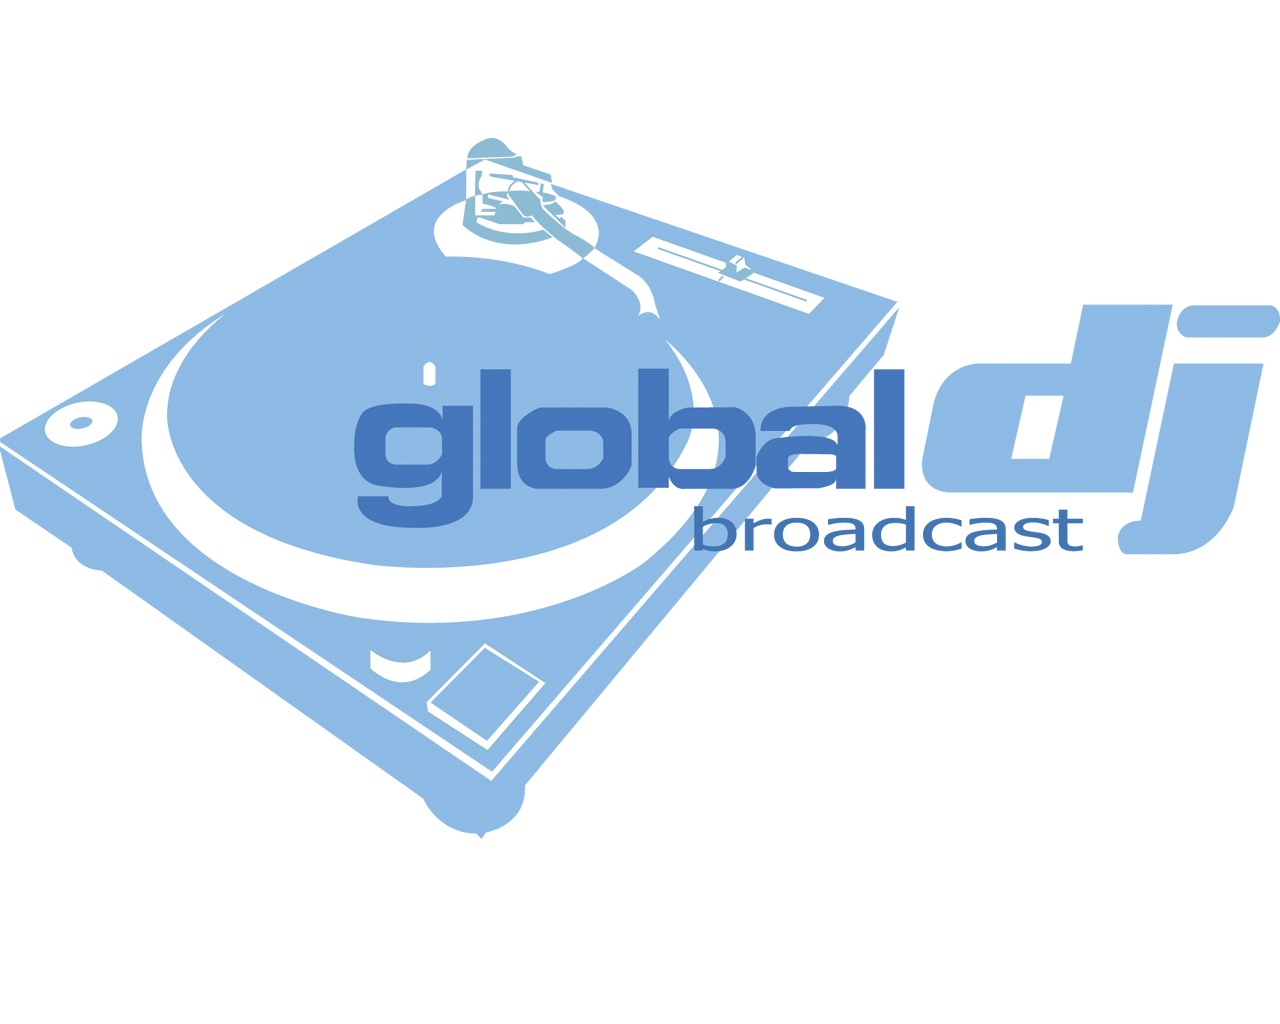 Global Dj Broadcast Wallpaper Music And Dance